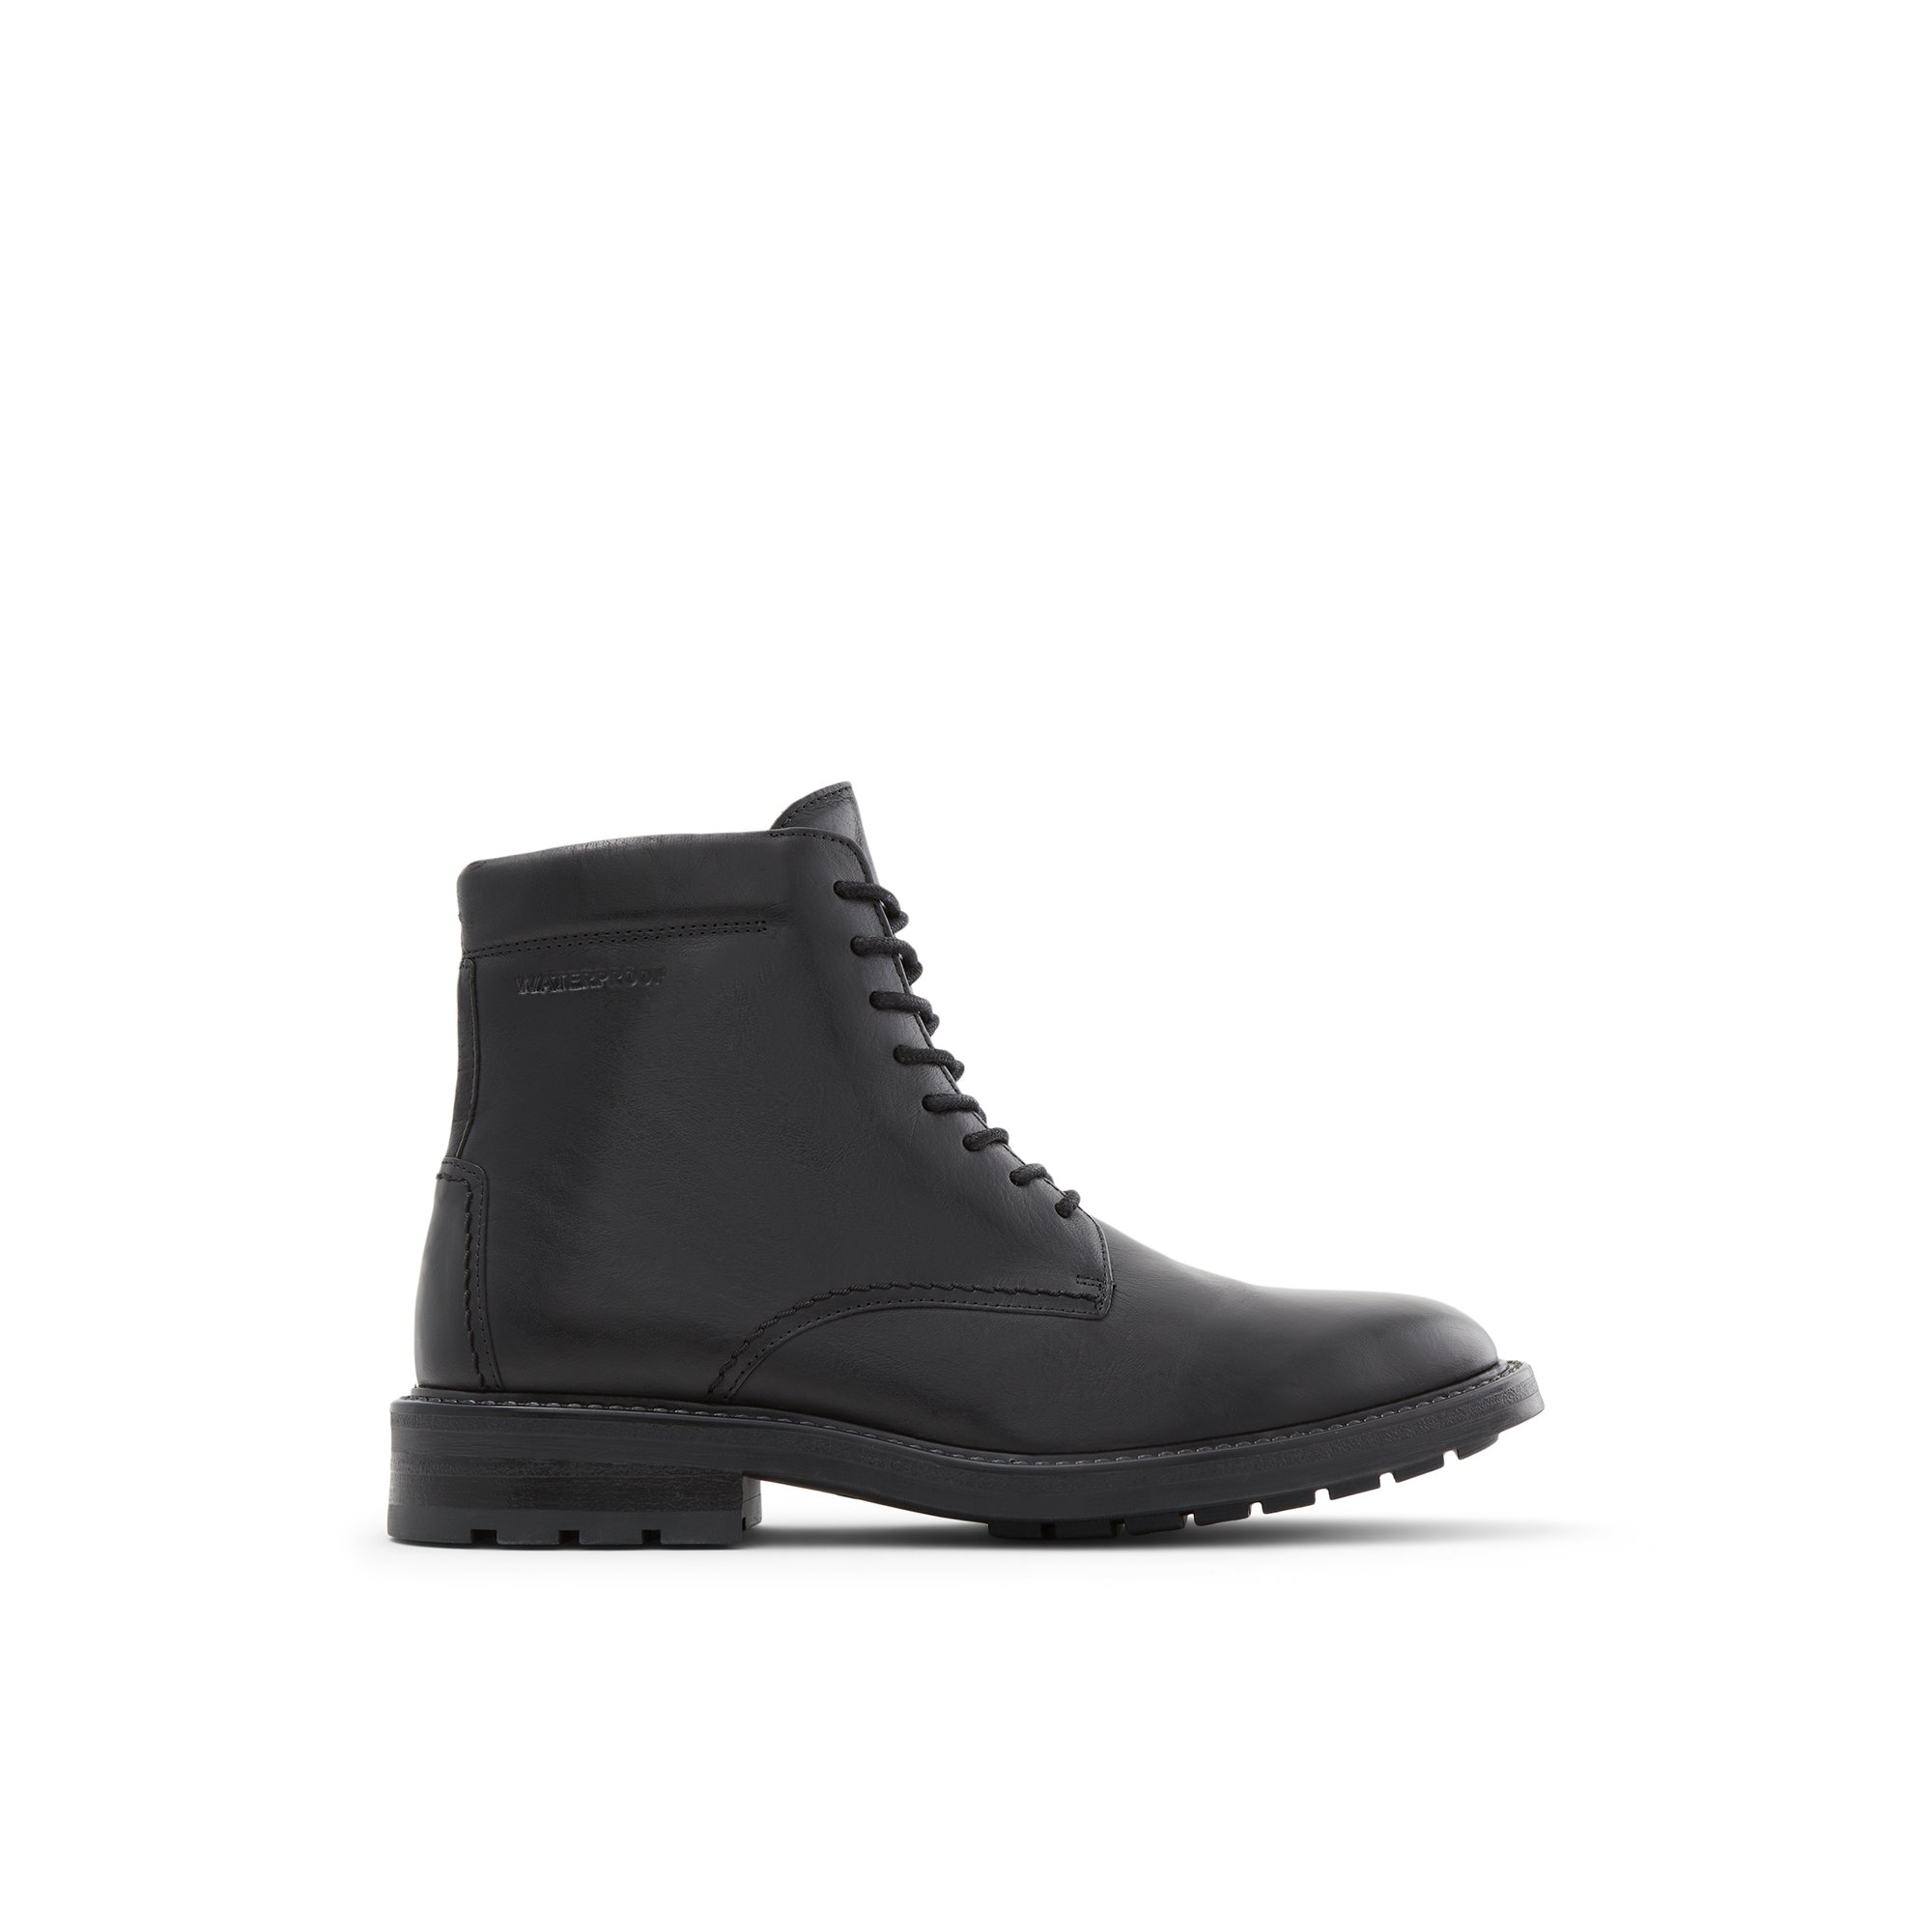 Image of ALDO Mireridien - Men's Casual Boot - Black, Size 10